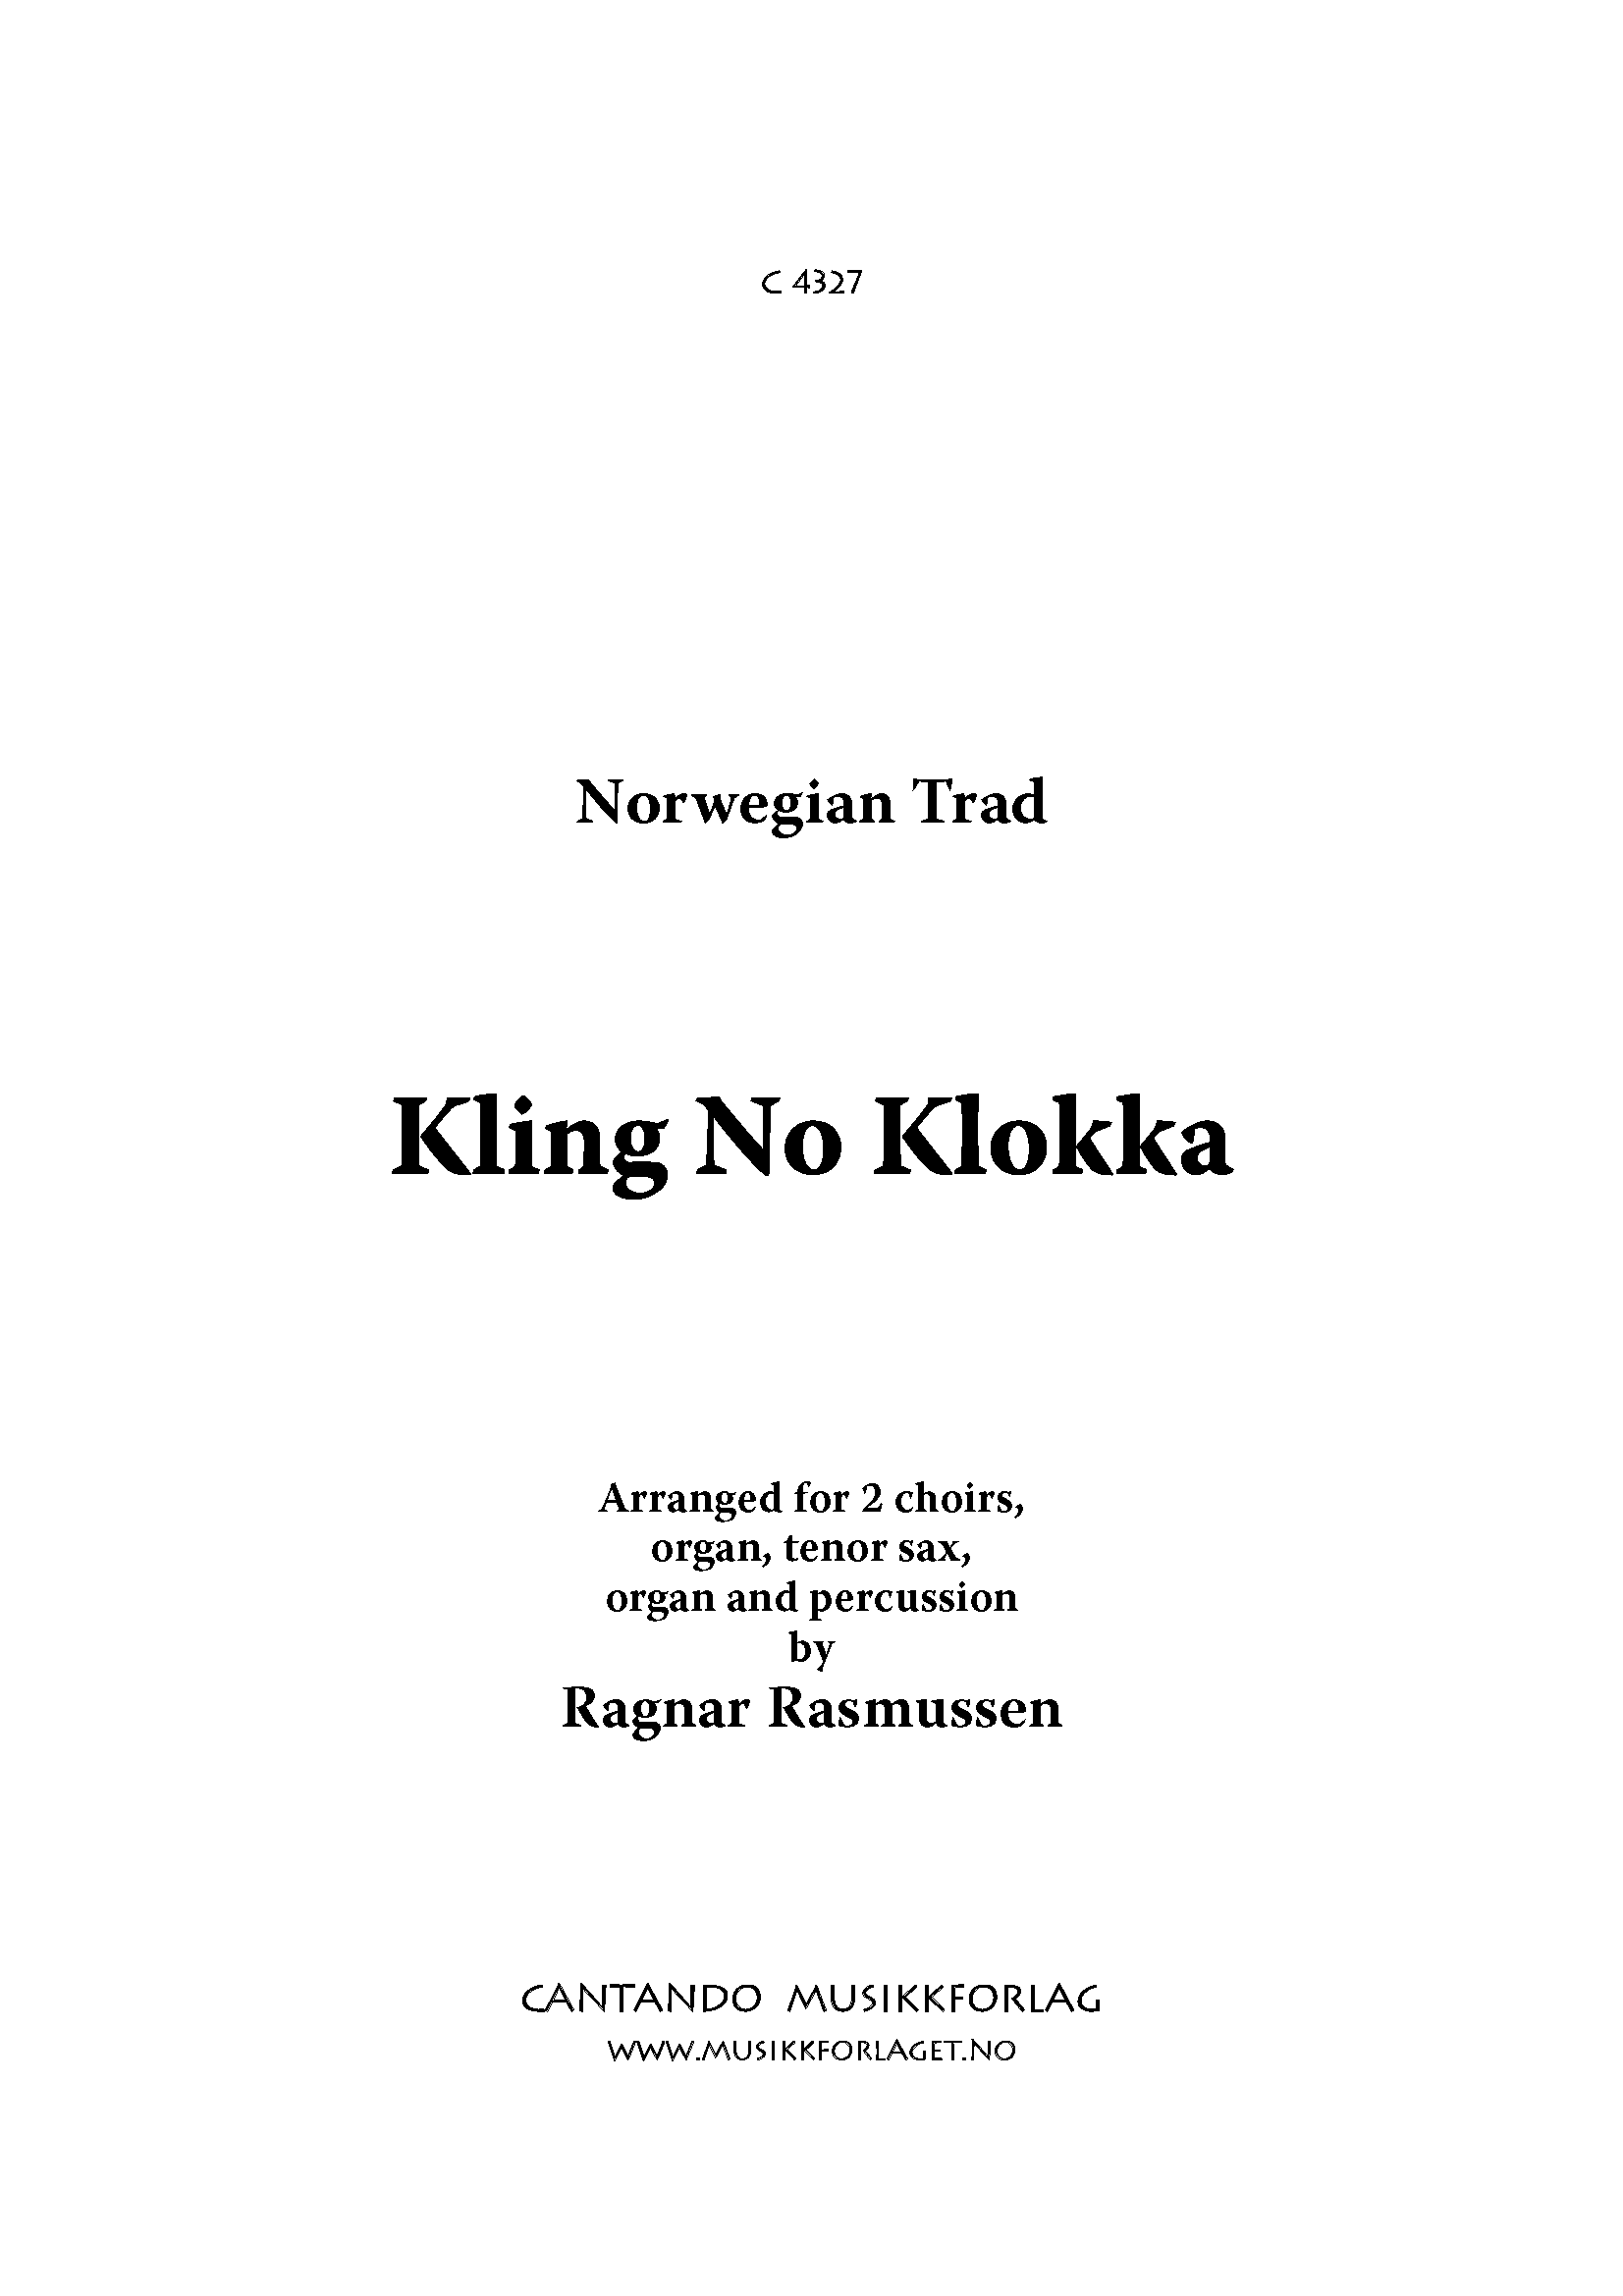 Kling no klokka -2 choirs,organ, tenor sax,organ and percussion (Arr.: Ragnar Rasmussen)